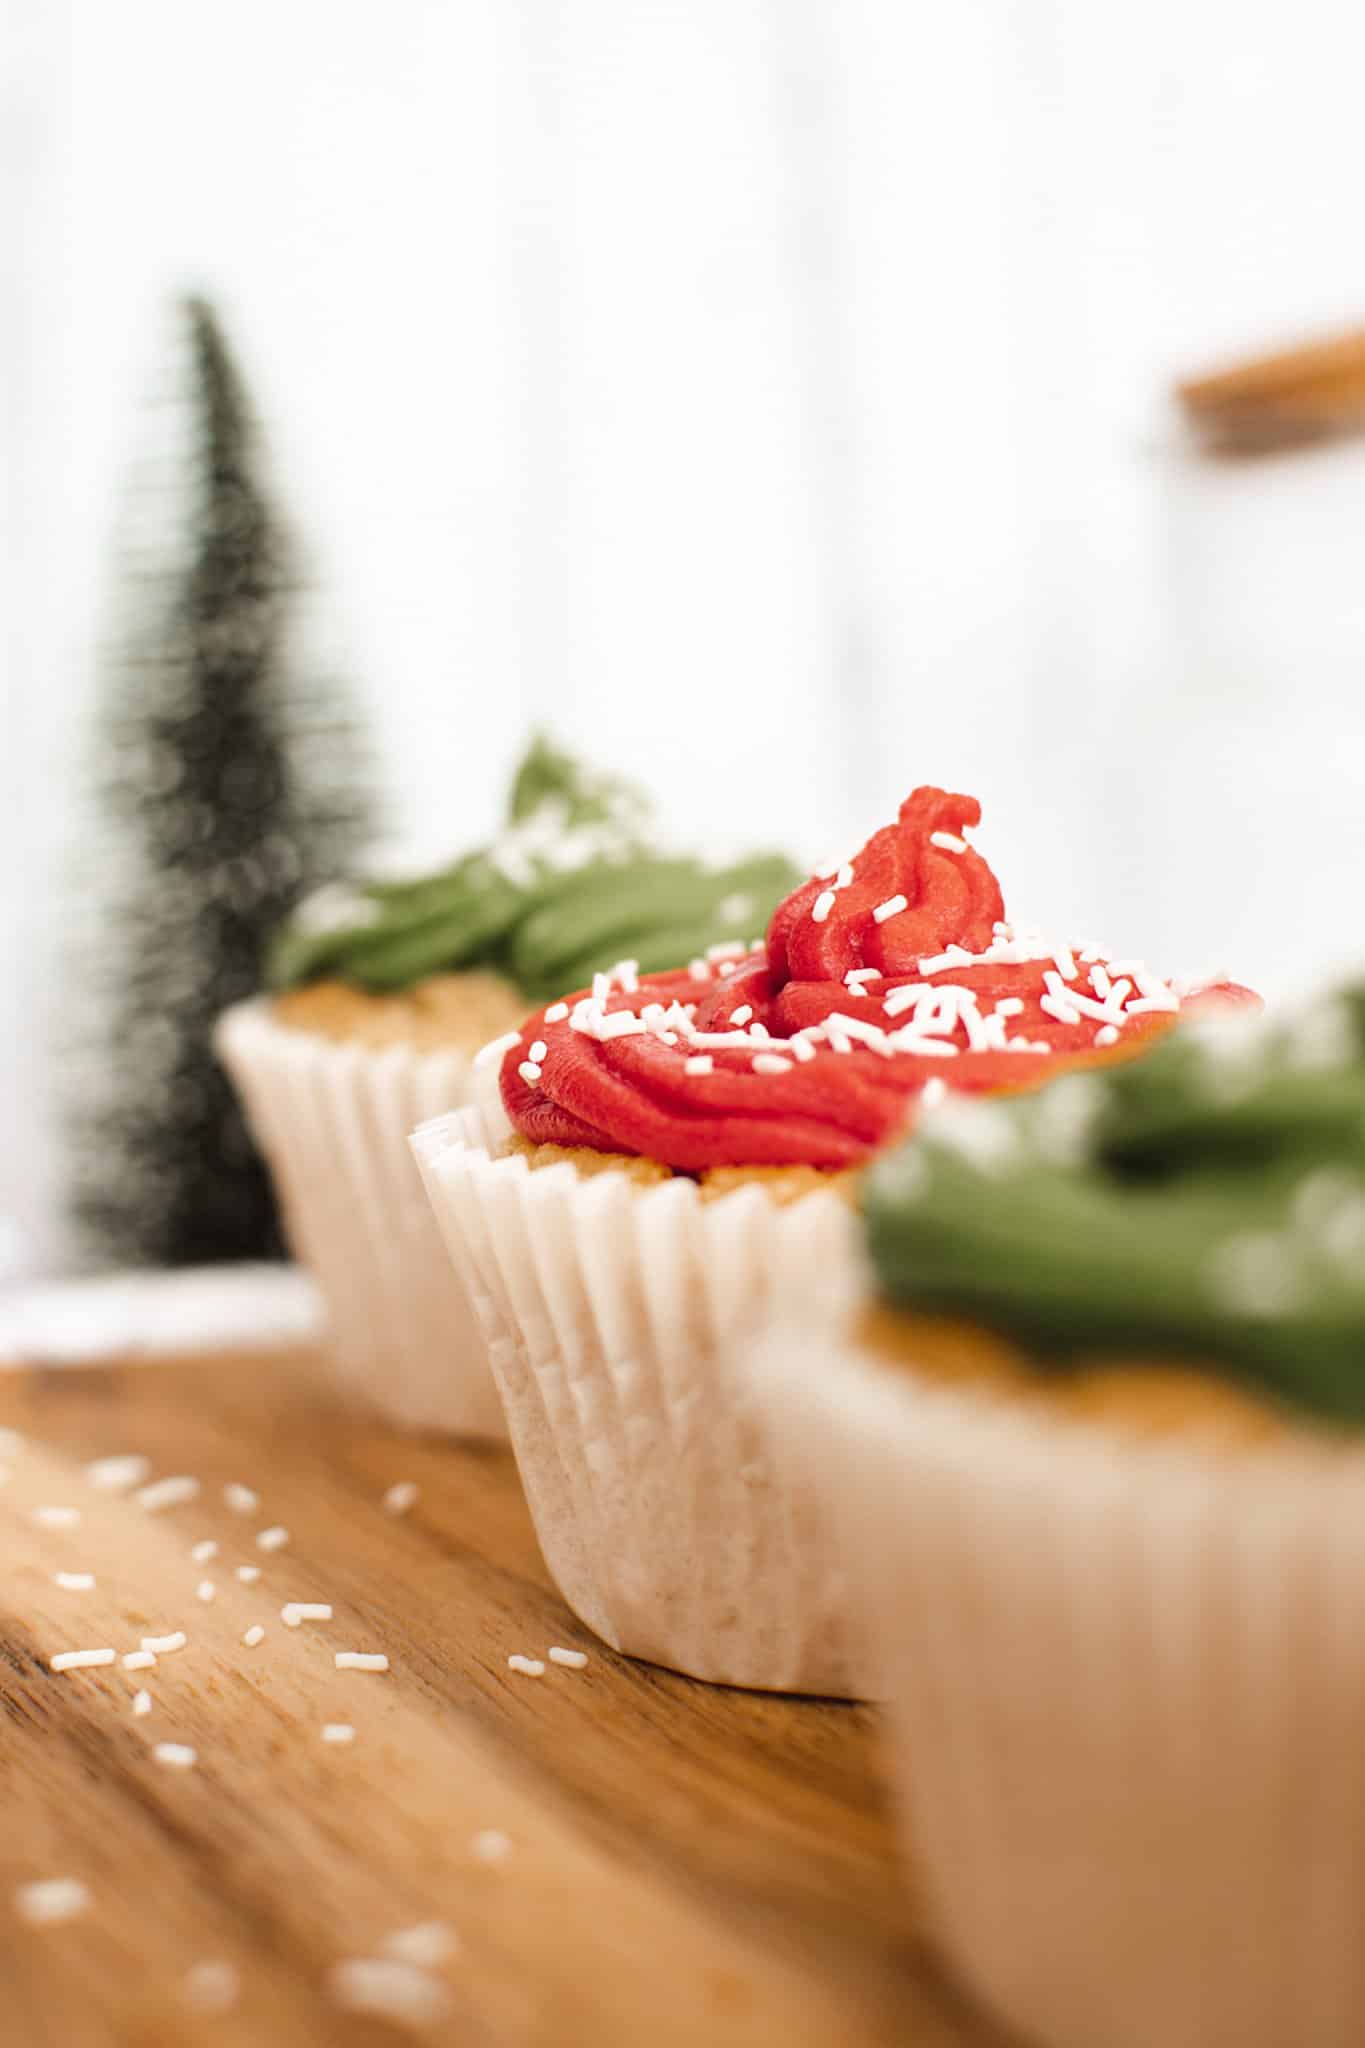 How to Make Homemade Vegan Christmas Cupcakes